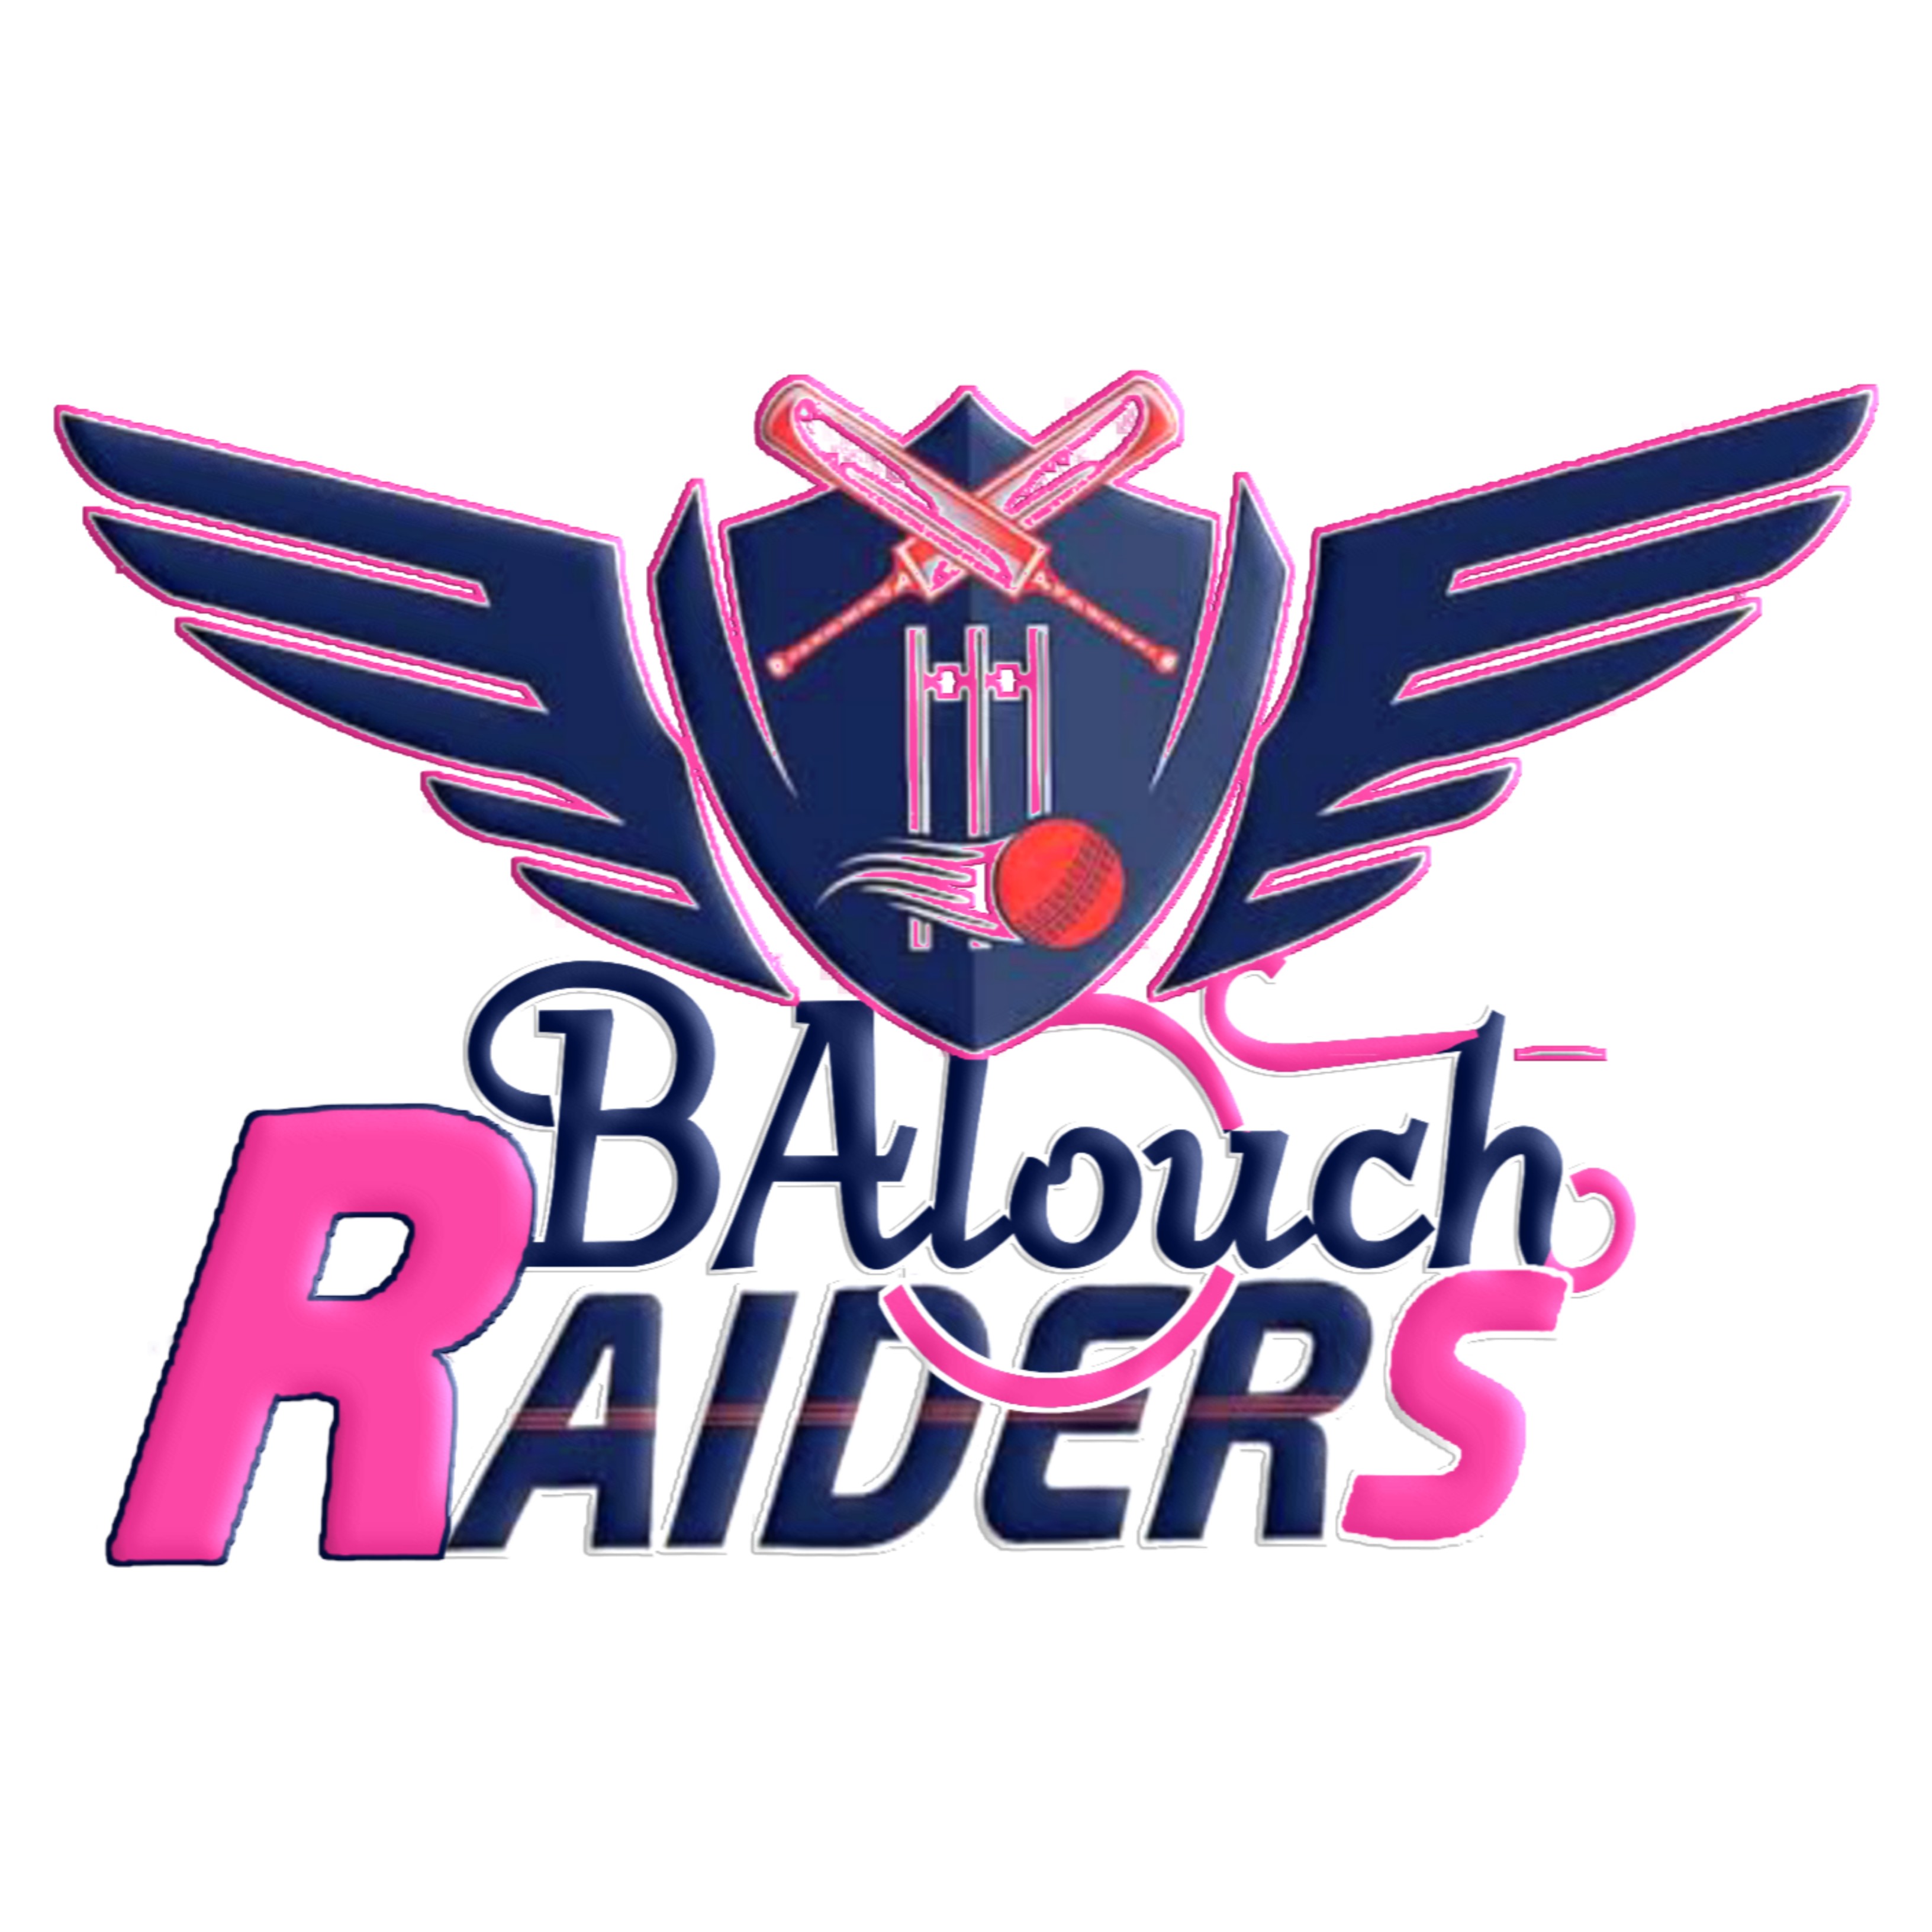 Balouch Raiders